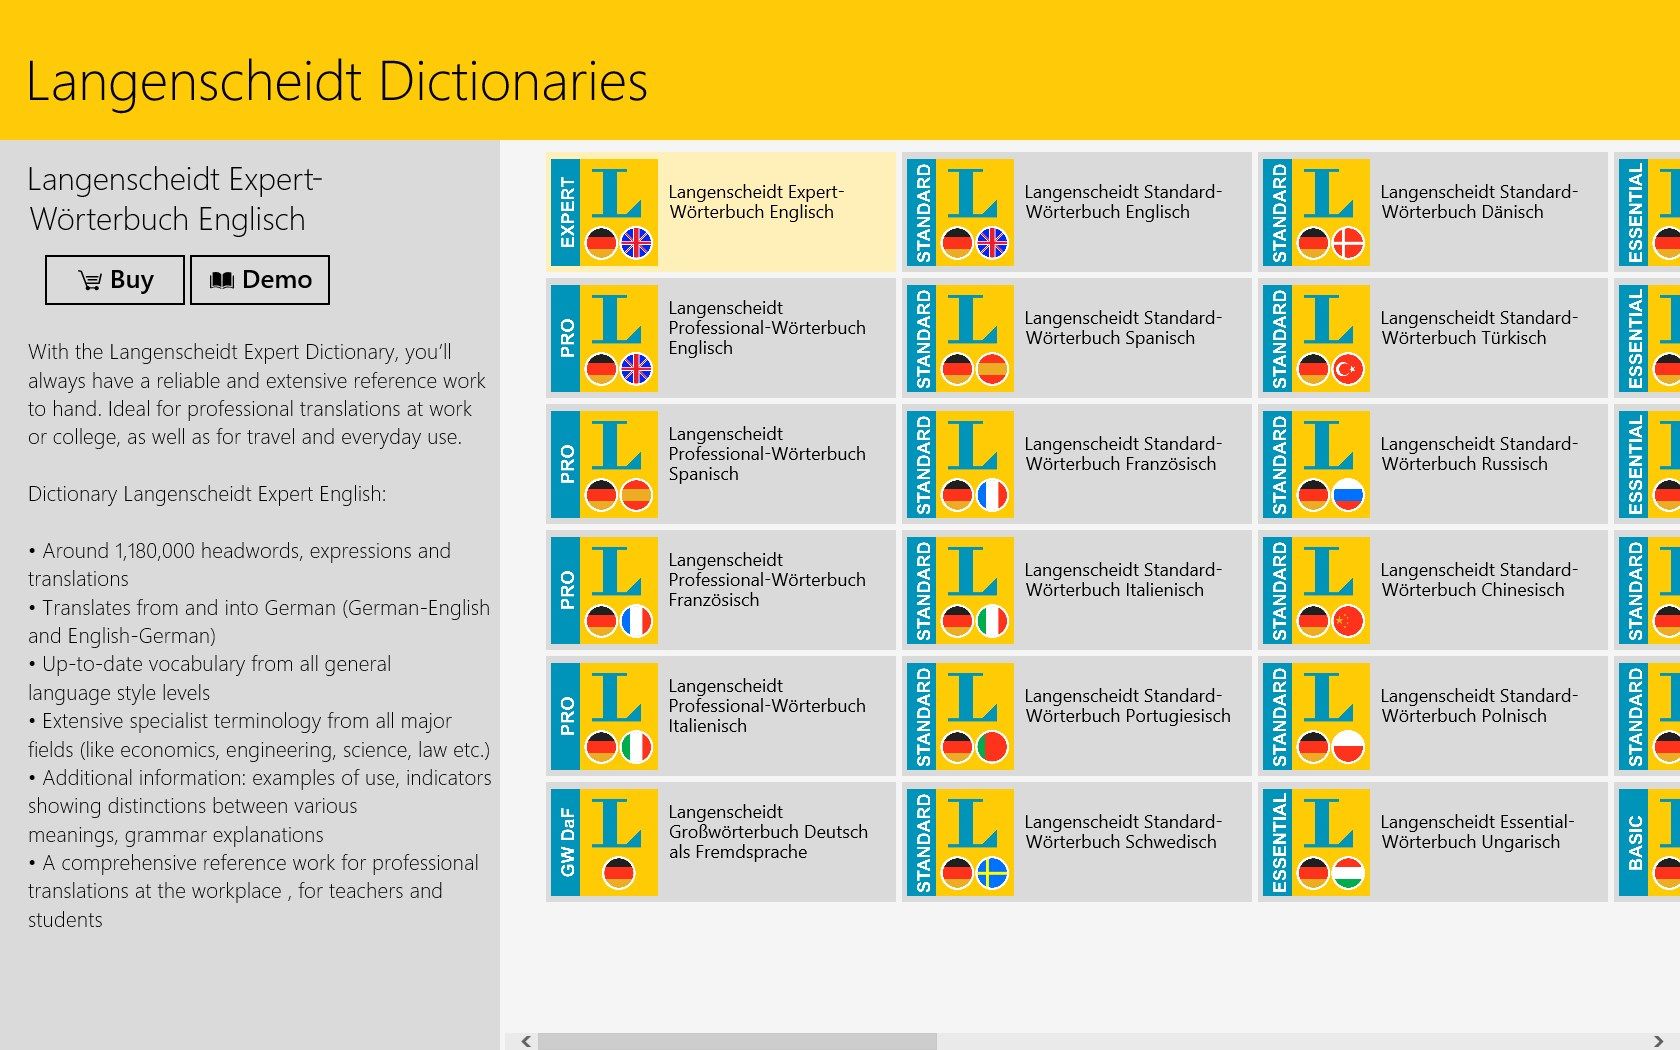 Get access to German premium dictionaries in a single app!